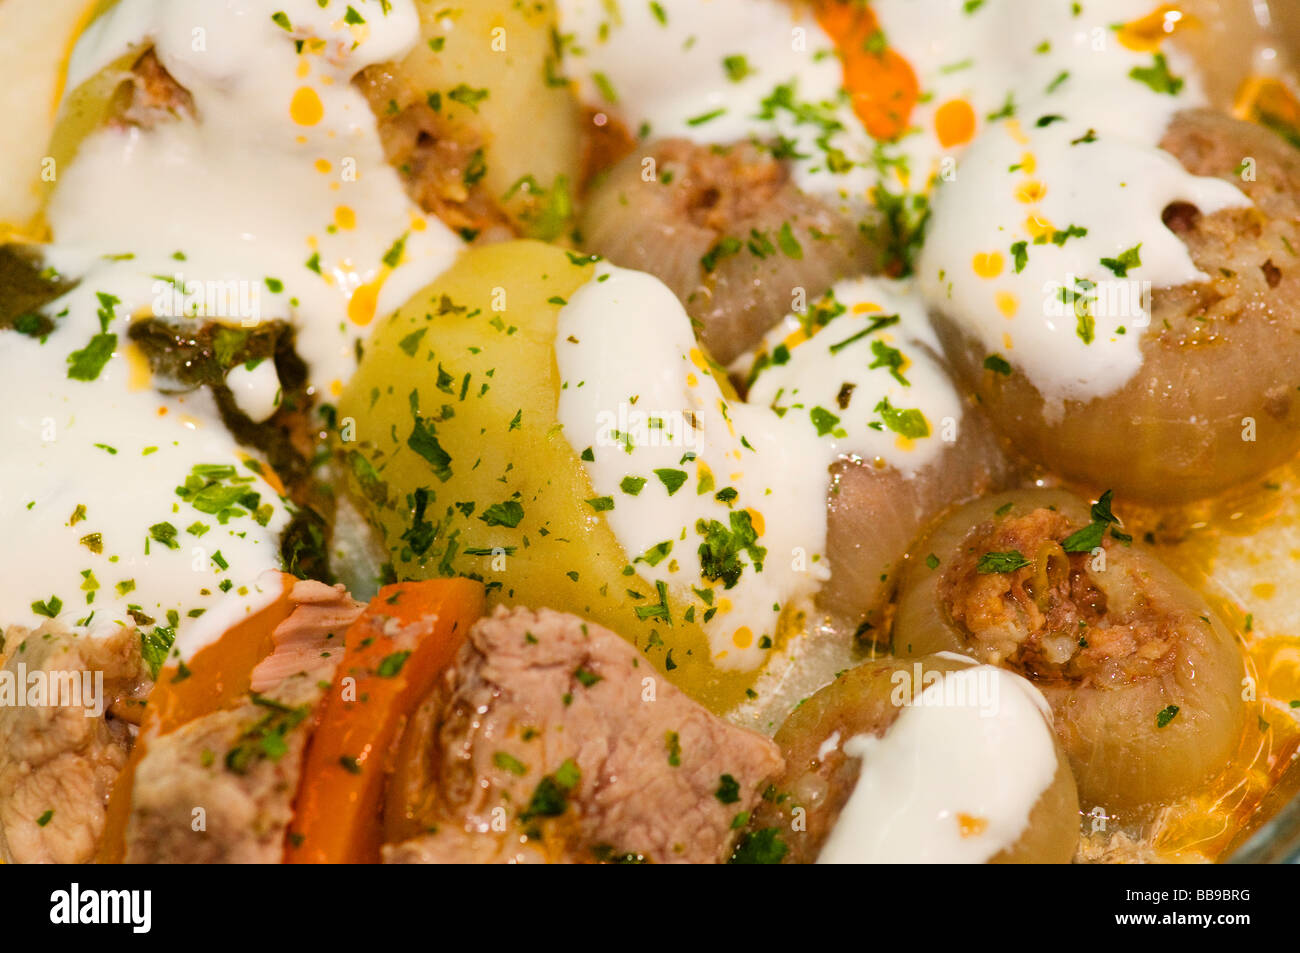 Traditional Bosnian Sahan meal containing stuffed vegetables with meat. Bosnia Herzegovina Stock Photo